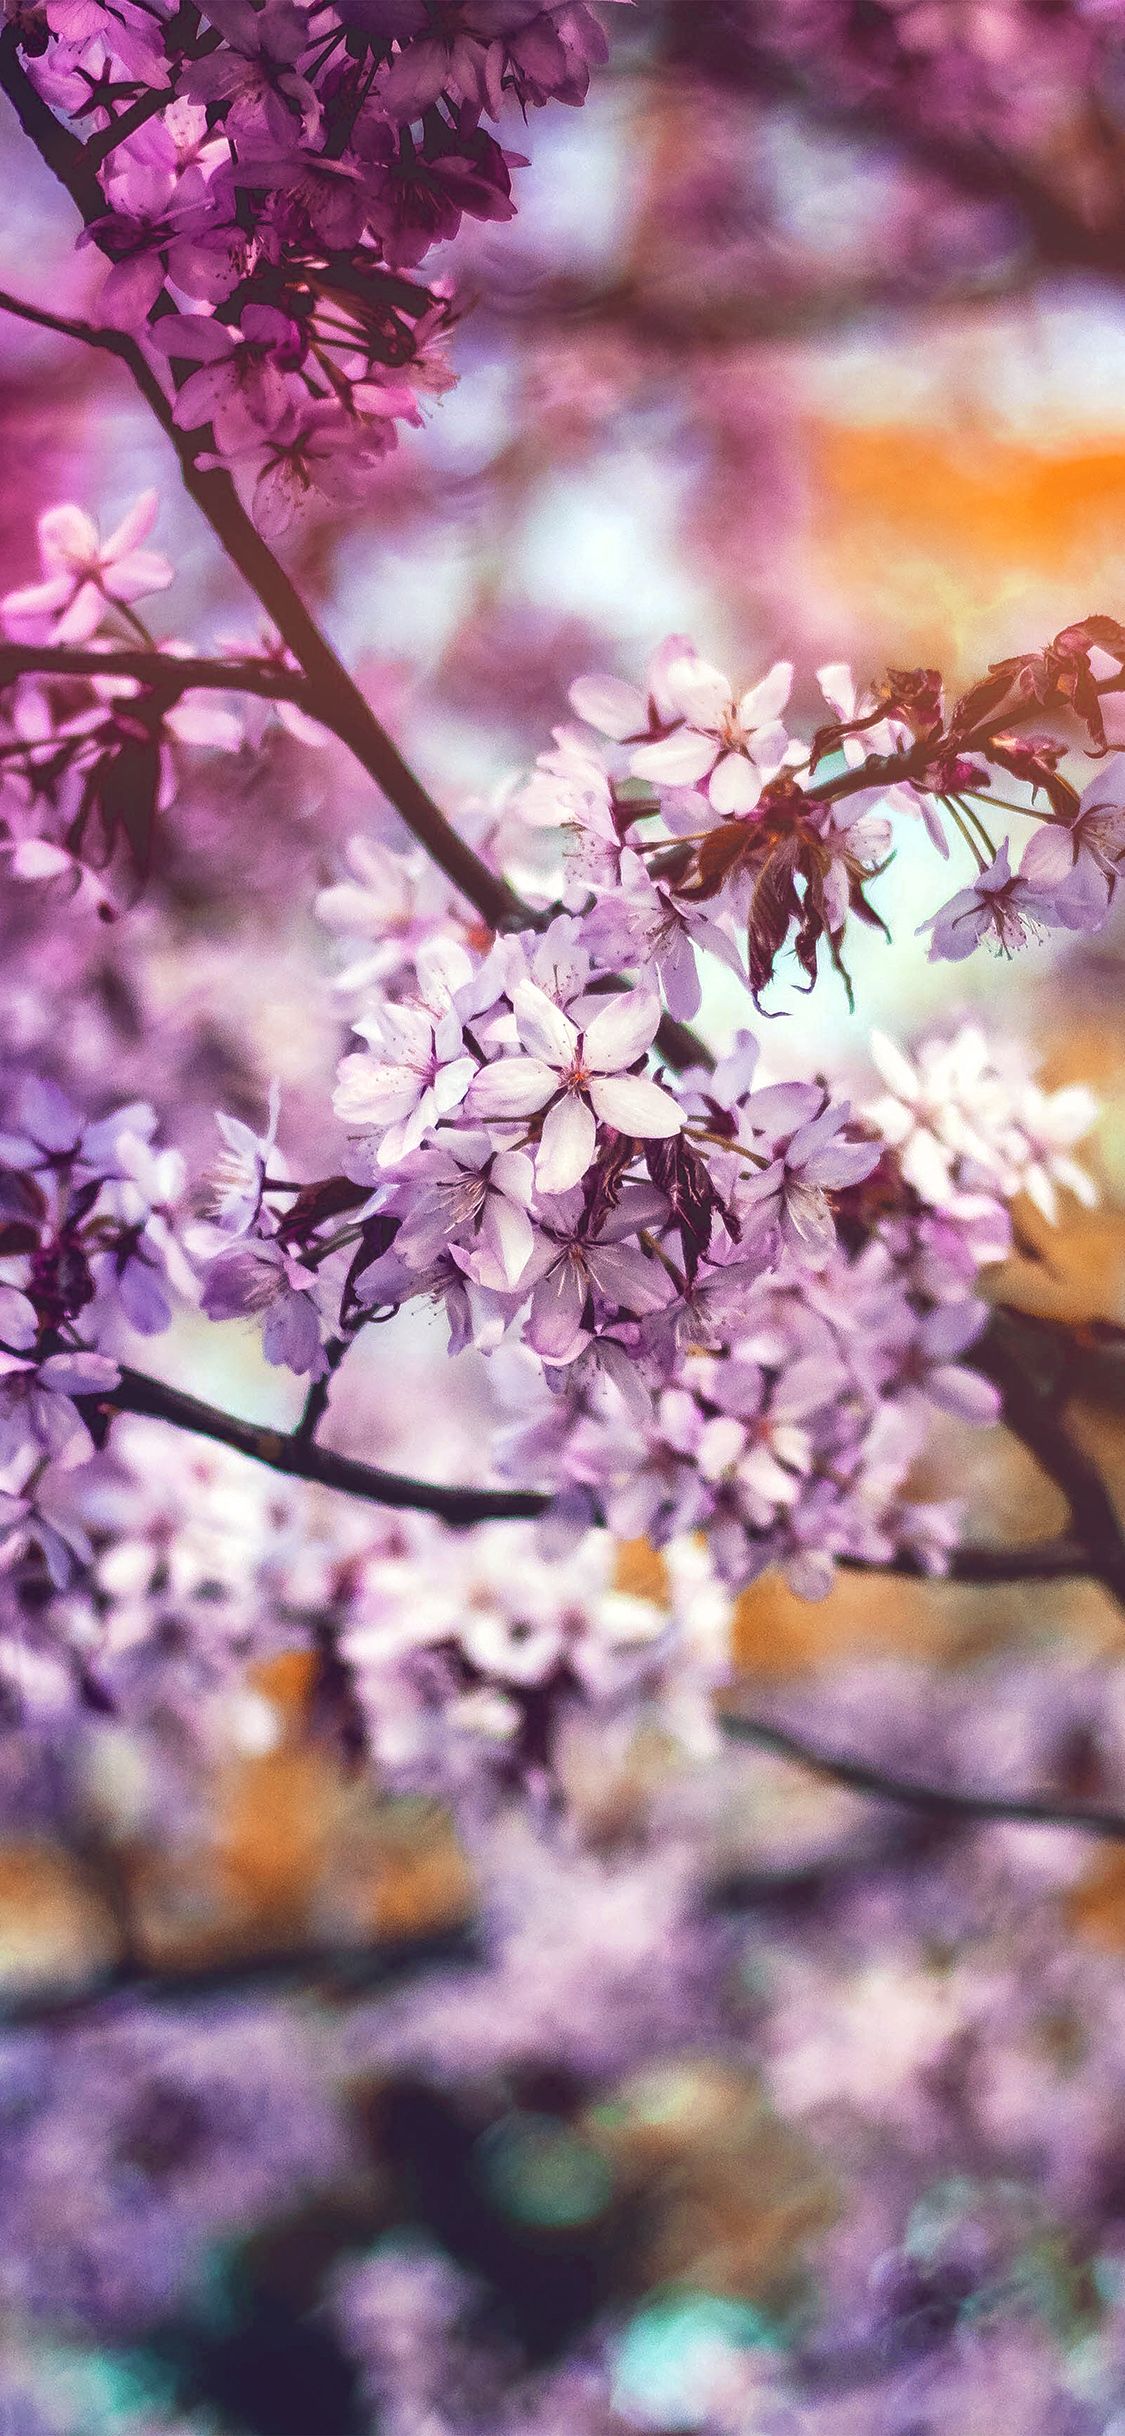 iPhone X wallpaper. flower pink blue nature bokeh tree spring rainbow flare